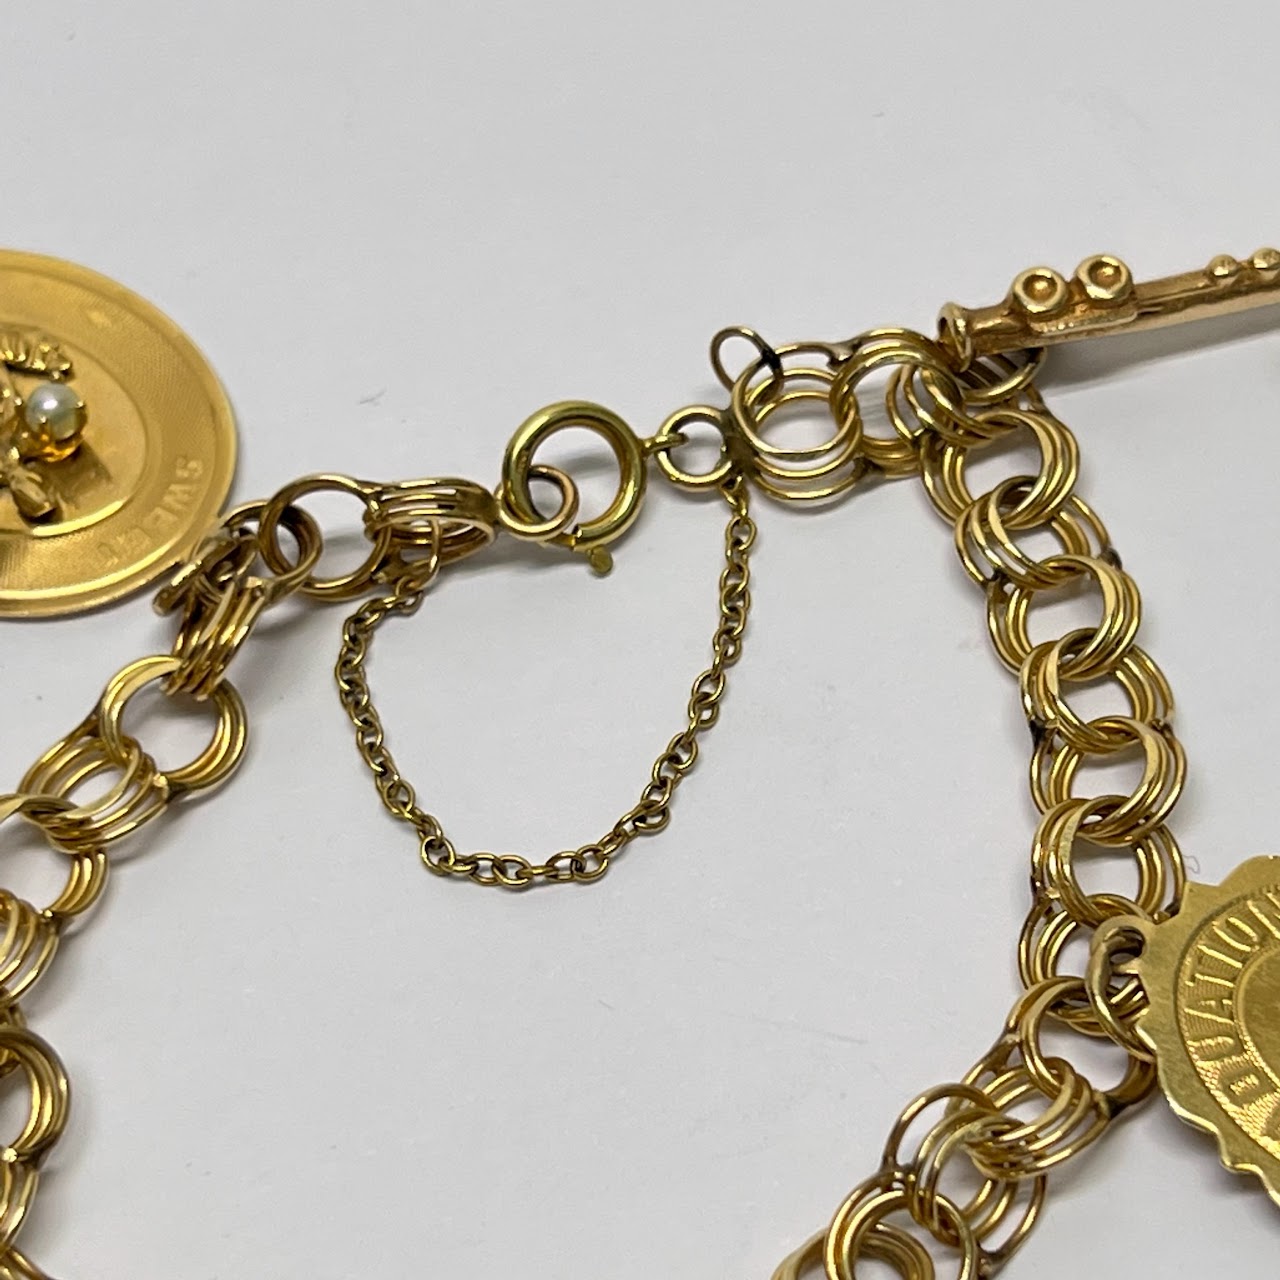 14K Gold and Sterling Silver Charm Bracelet